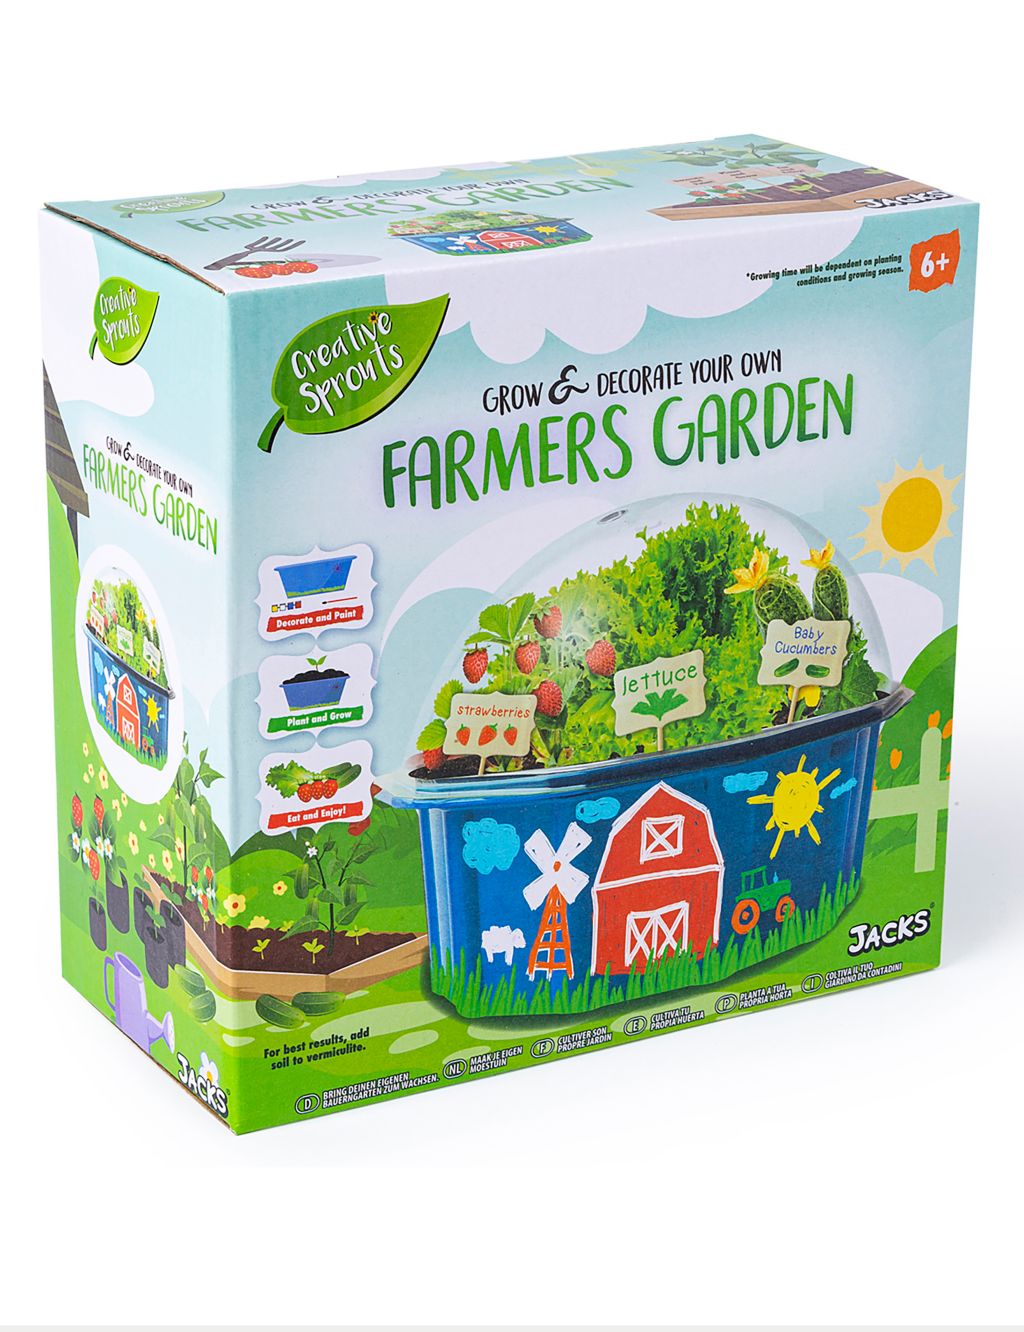 Grow & Decorate Your Own Farmer's Garden image 1